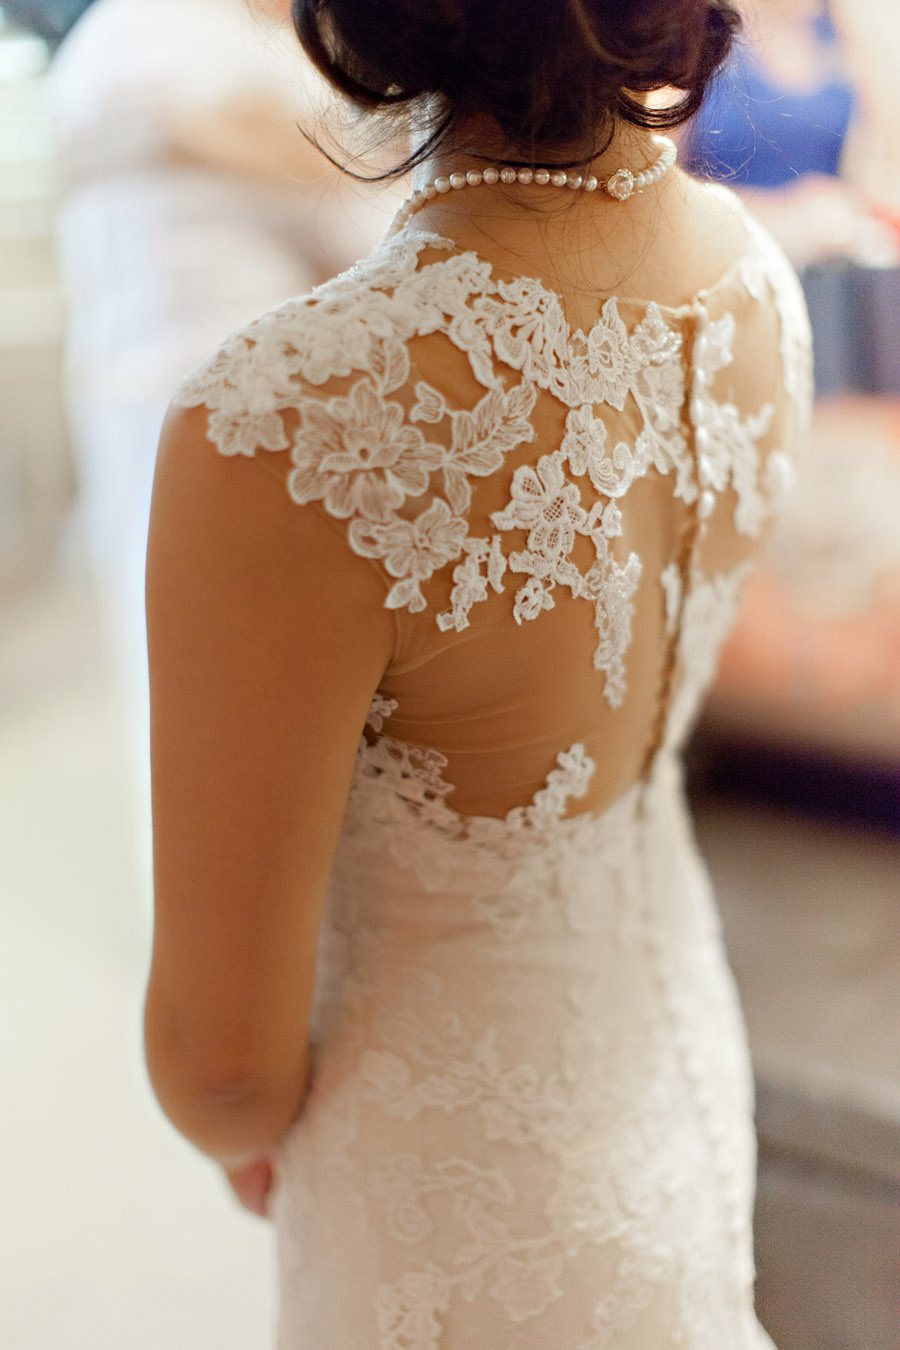 030-Dallas-Wedding-Gown-Bridal-Gown-by-Ivy-Weddings-Dallas-Wedding-Photographer-Planned-By-Swank-Soiree-Dallas-Wedding-Planner.jpg